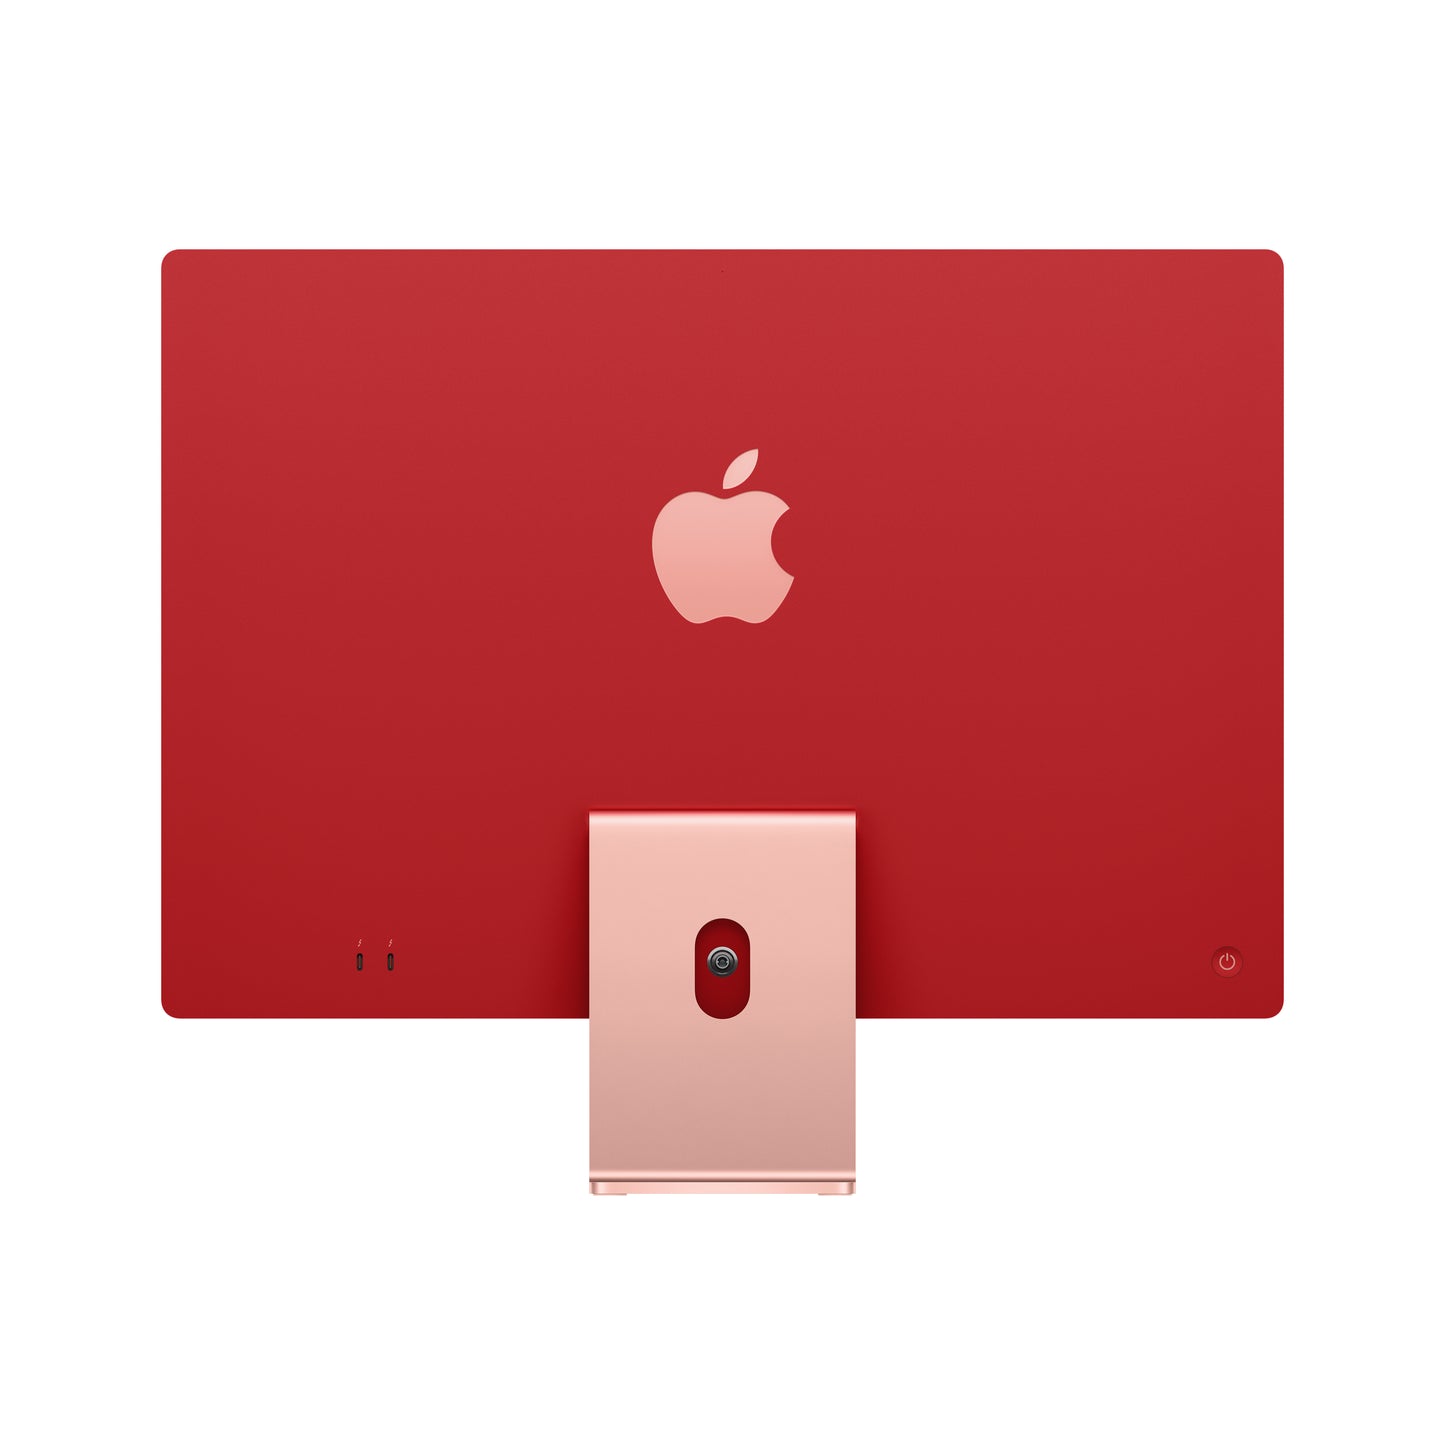 24-inch iMac with Retina 4.5K display: Apple M1 chip with 8_core CPU and 7_core GPU, 256GB - Pink